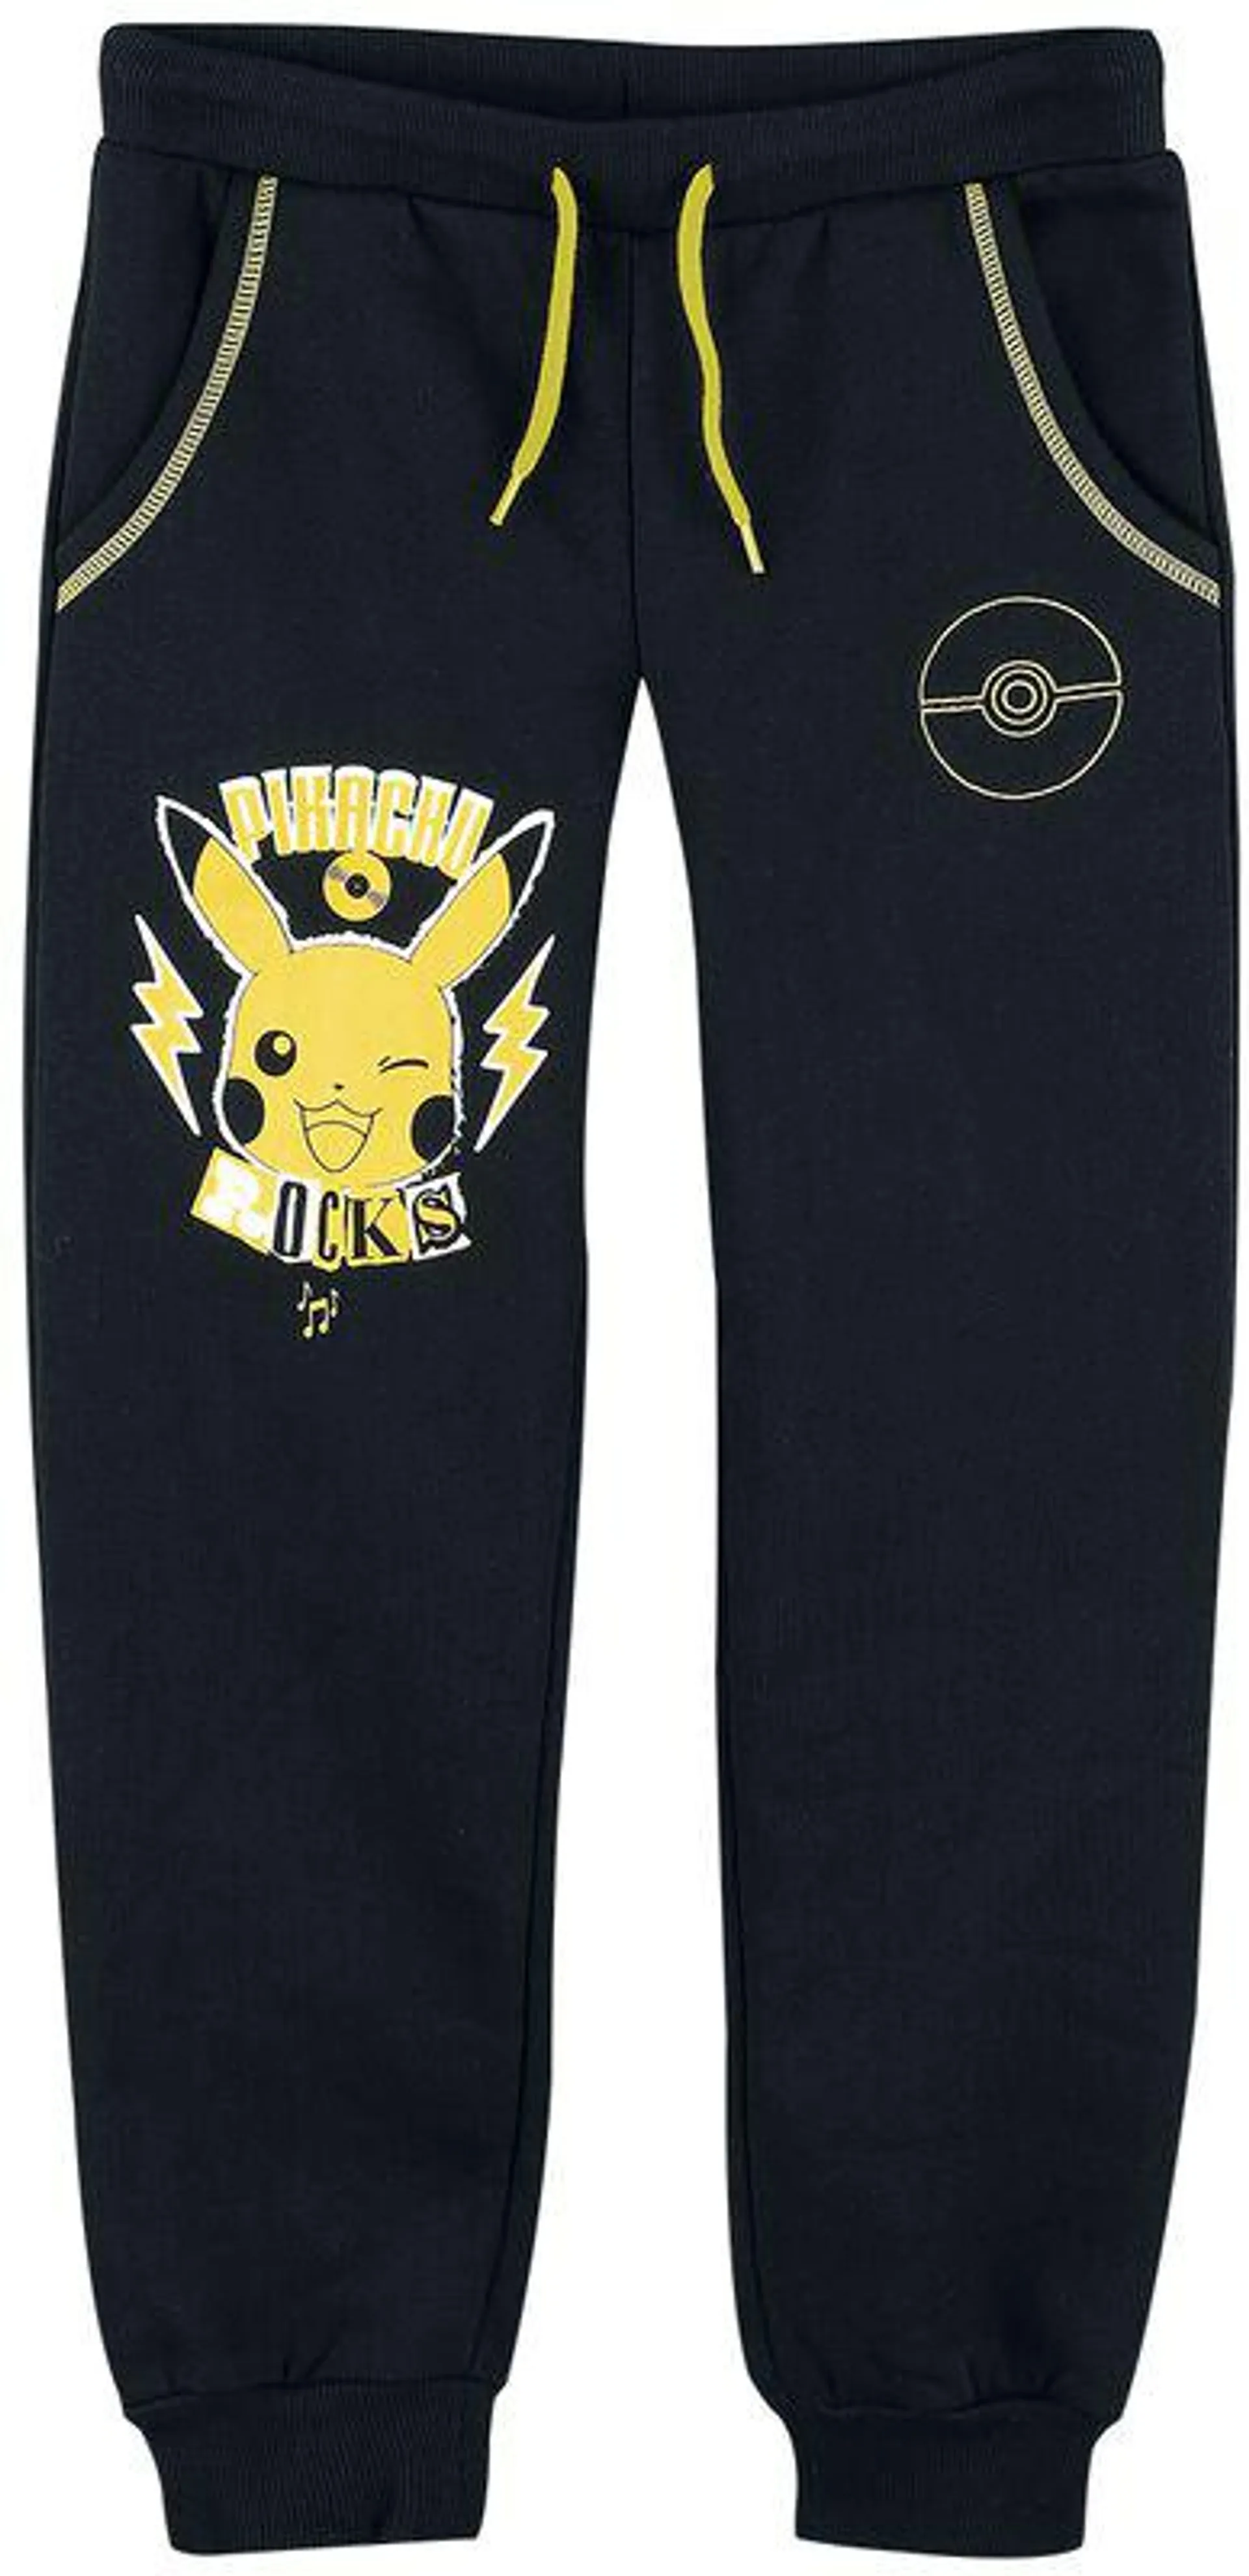 "Kids - Pikachu - Rocks" Pantalones de chándal Negro de Pokémon